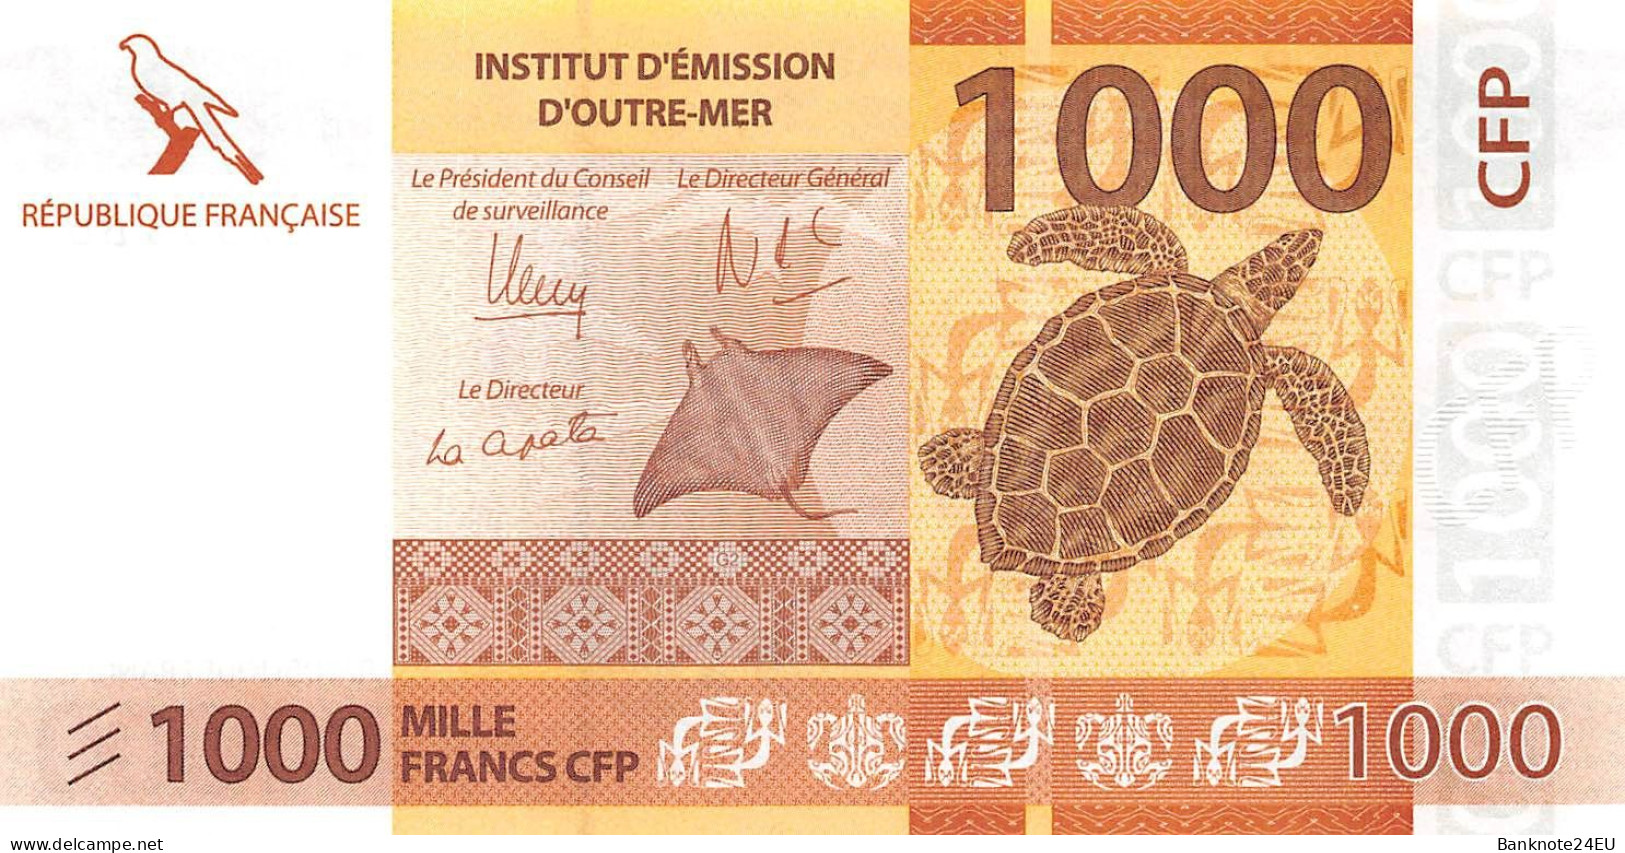 French Pacific Territories 1000 Francs CFP 2014 Unc Pn 6a - Französisch-Pazifik Gebiete (1992-...)